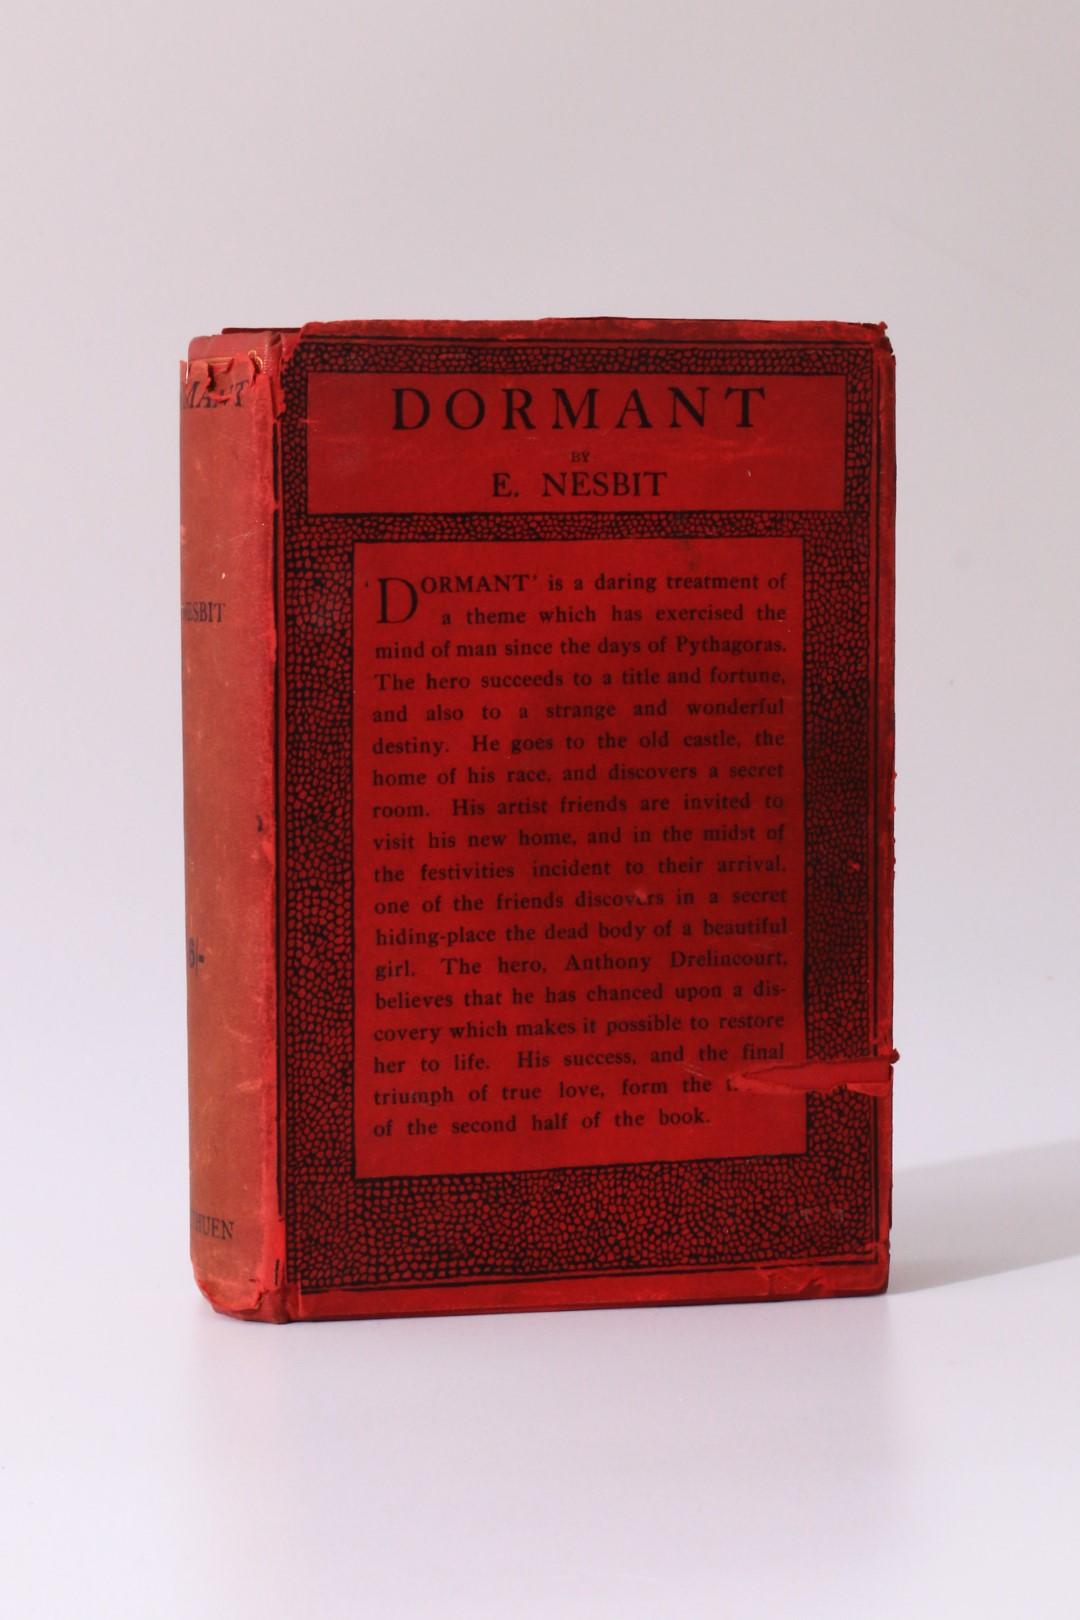 E. Nesbit - Dormant - Methuen, 1911, Second Edition. Signed